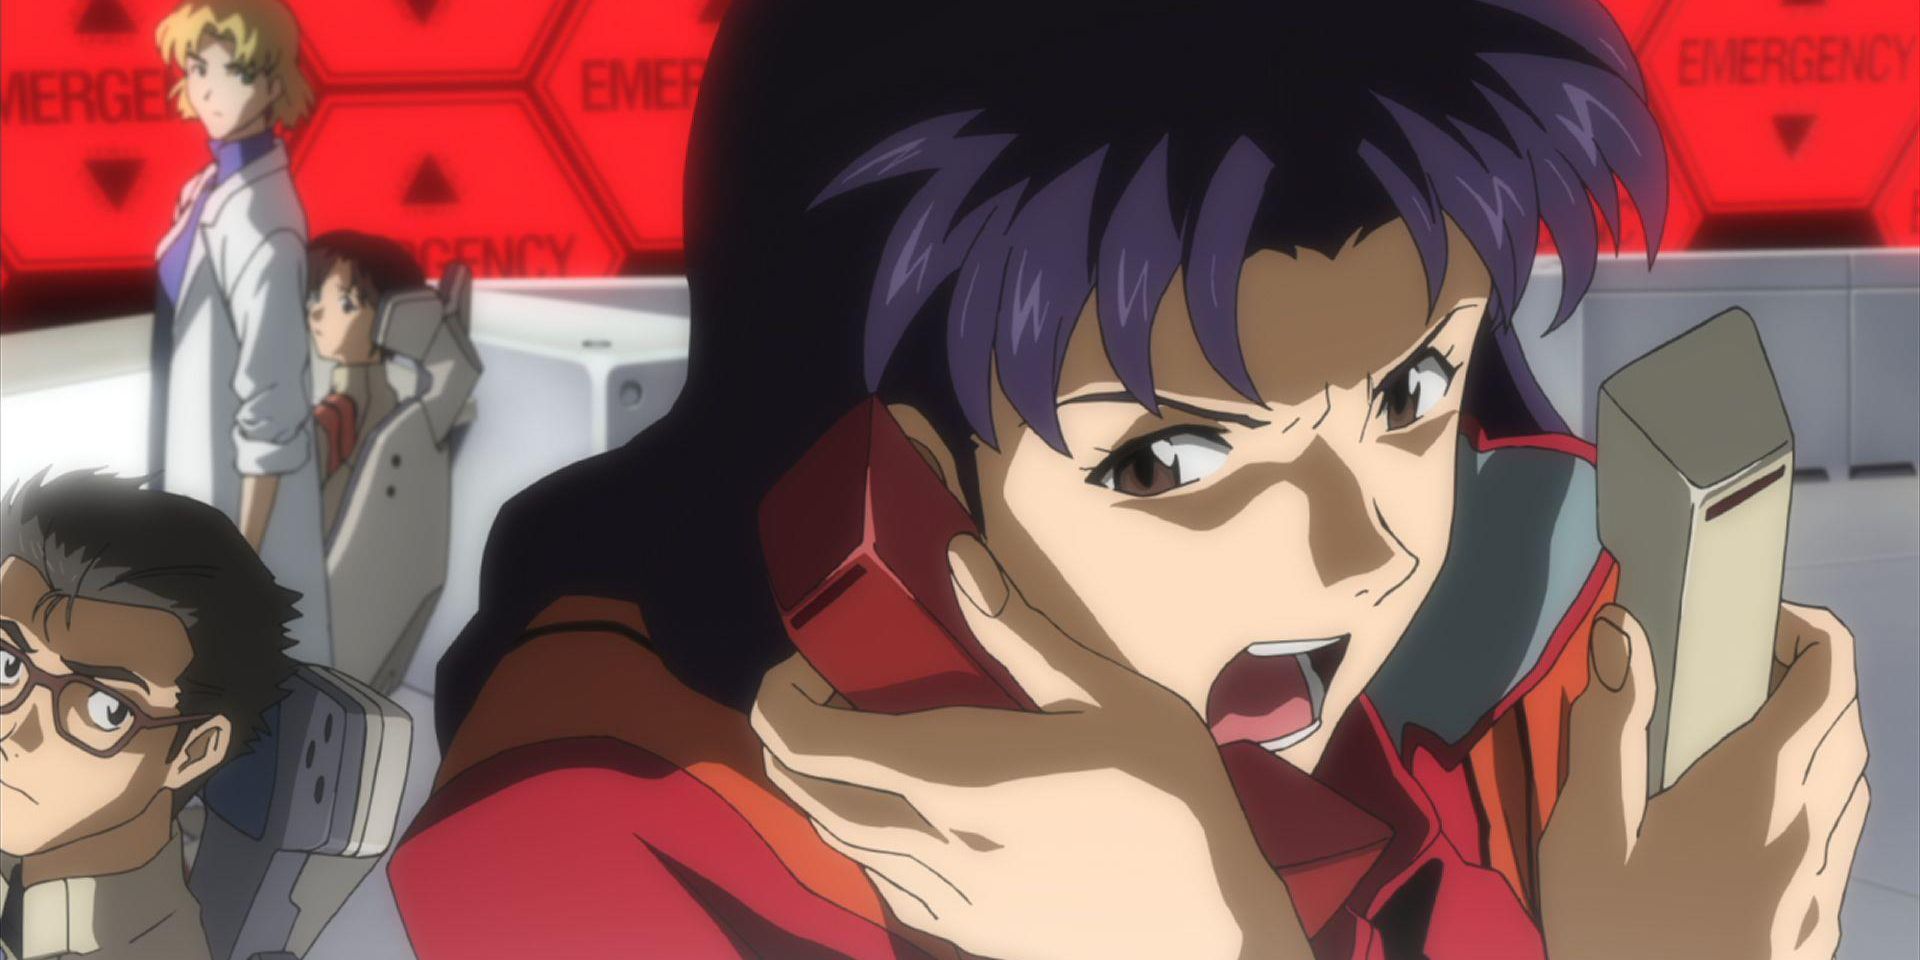 Anime Neon Genesis Evangelion Misato Katsuragi shouting into a phone